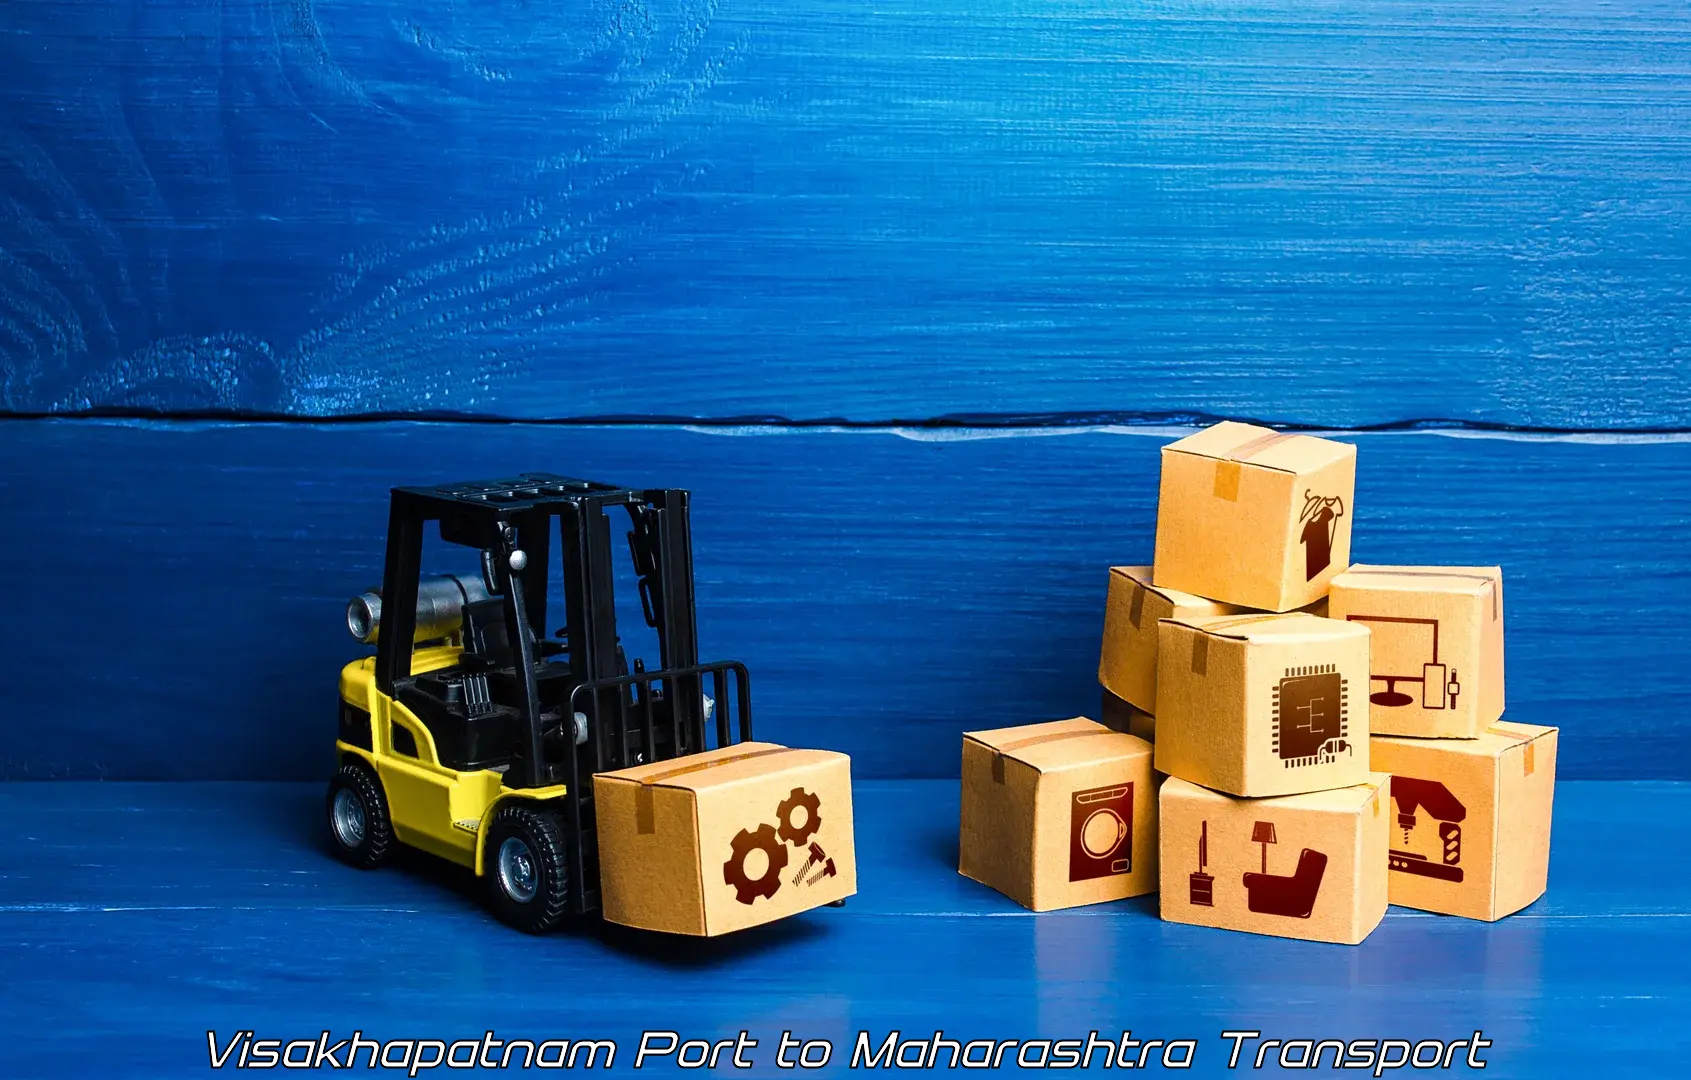 Furniture transport service in Visakhapatnam Port to Ballarpur